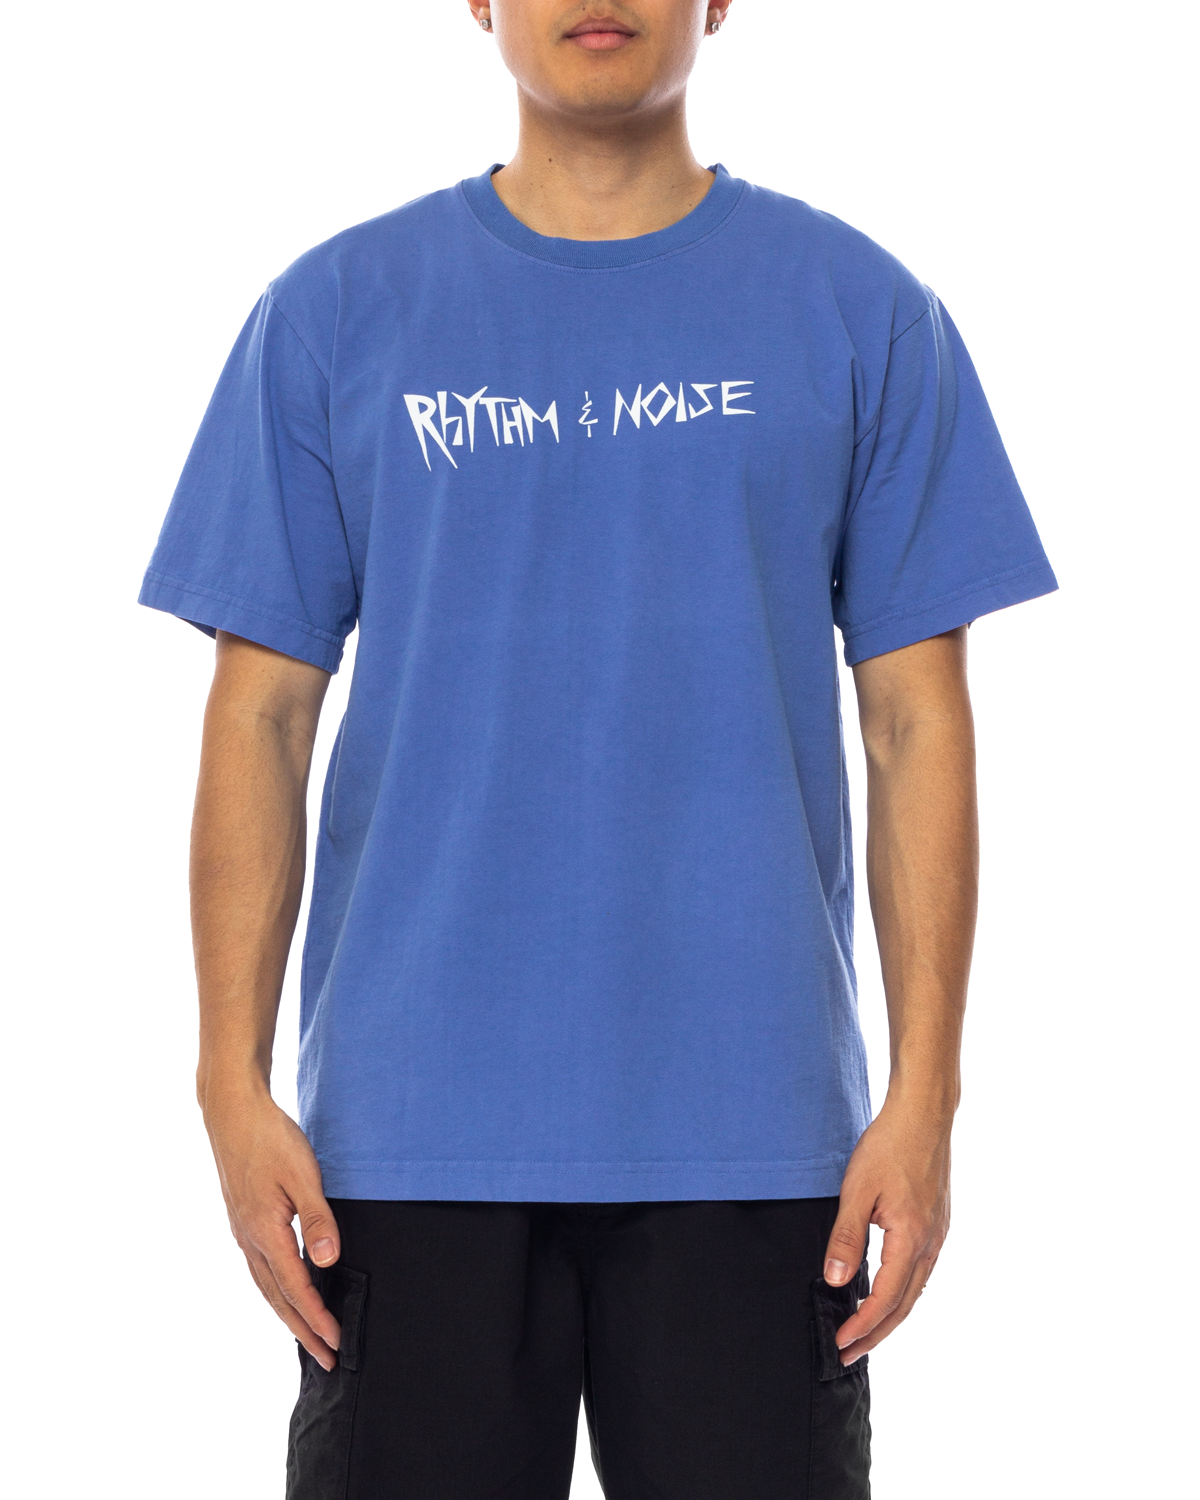 Rhythm & Noise Short Sleeve T-Shirt Periwinkle